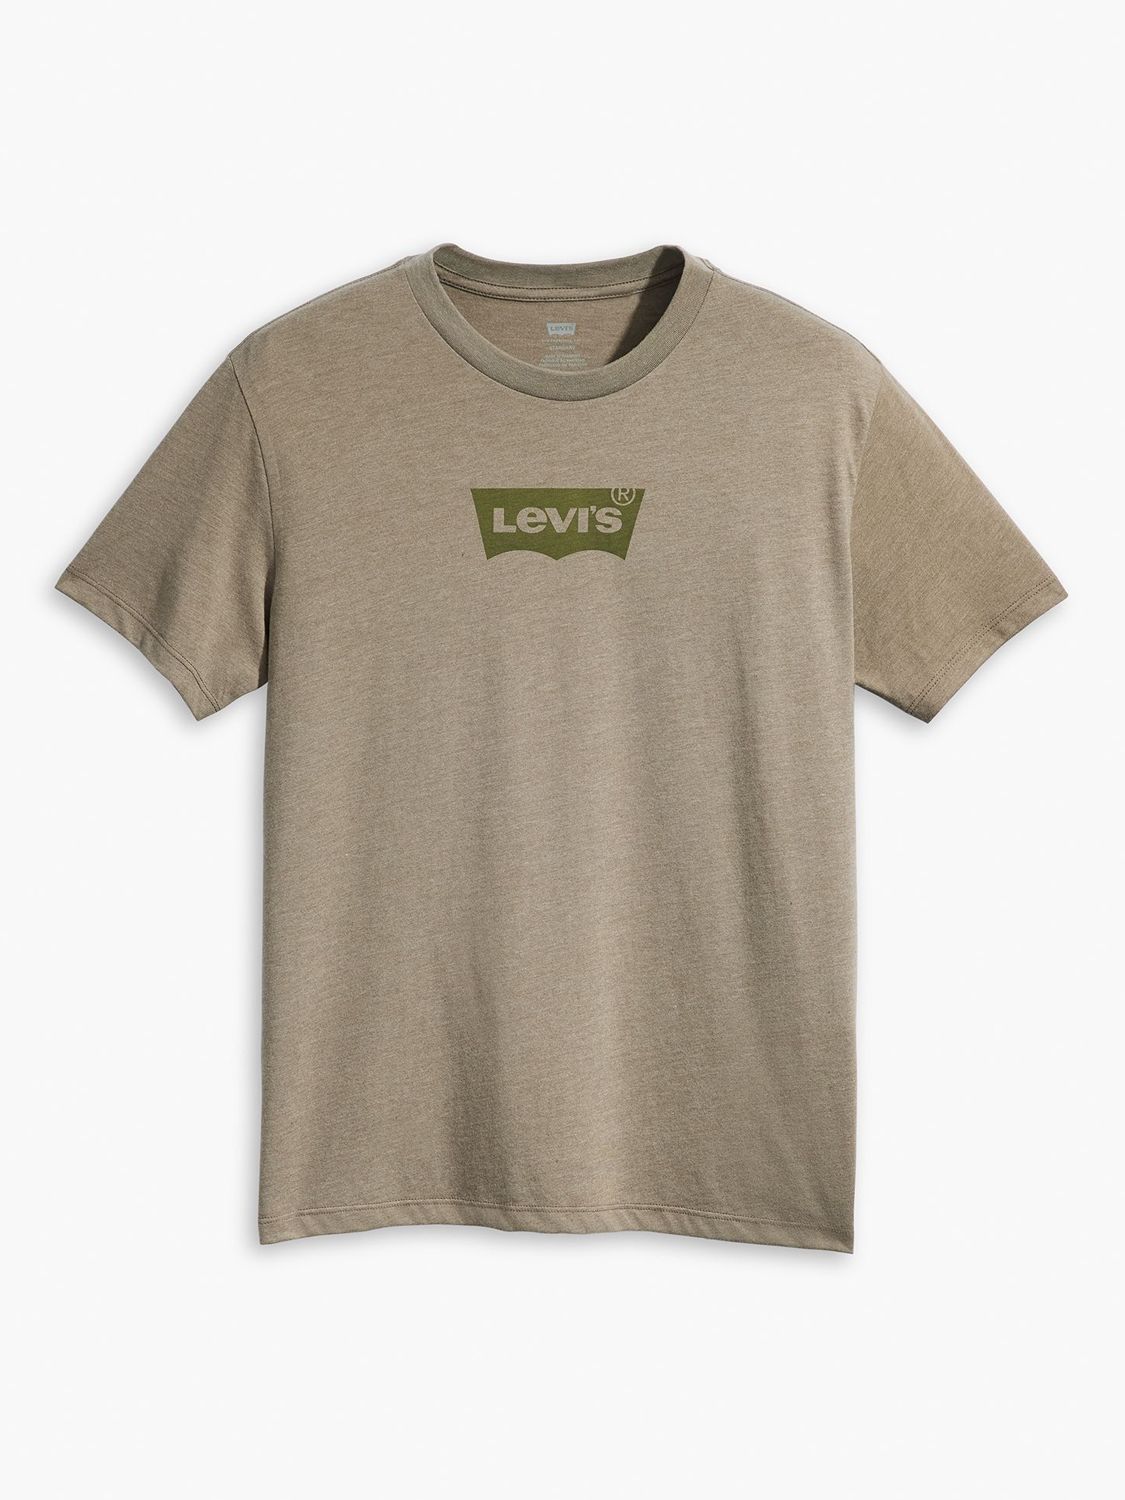 Levi's Graphic Crew Neck T-Shirt, Olive, XL